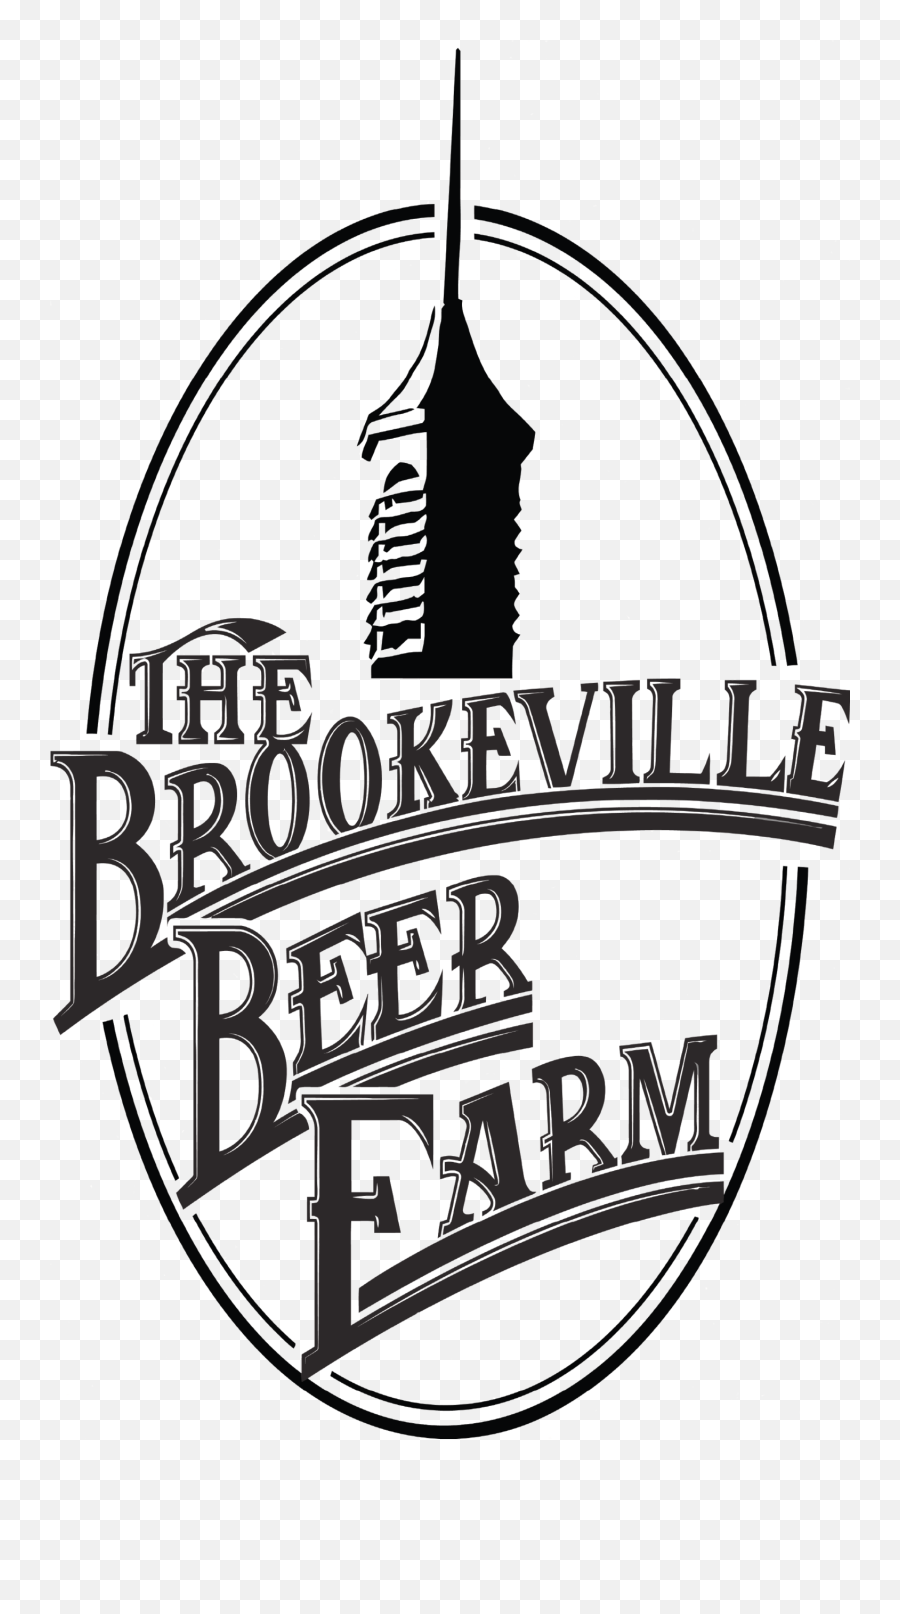 Brookeville Beer Farm Tap Takeover Clipart - Full Size Brookeville Beer Farm Brewing Emoji,Beer Clinking Emoji